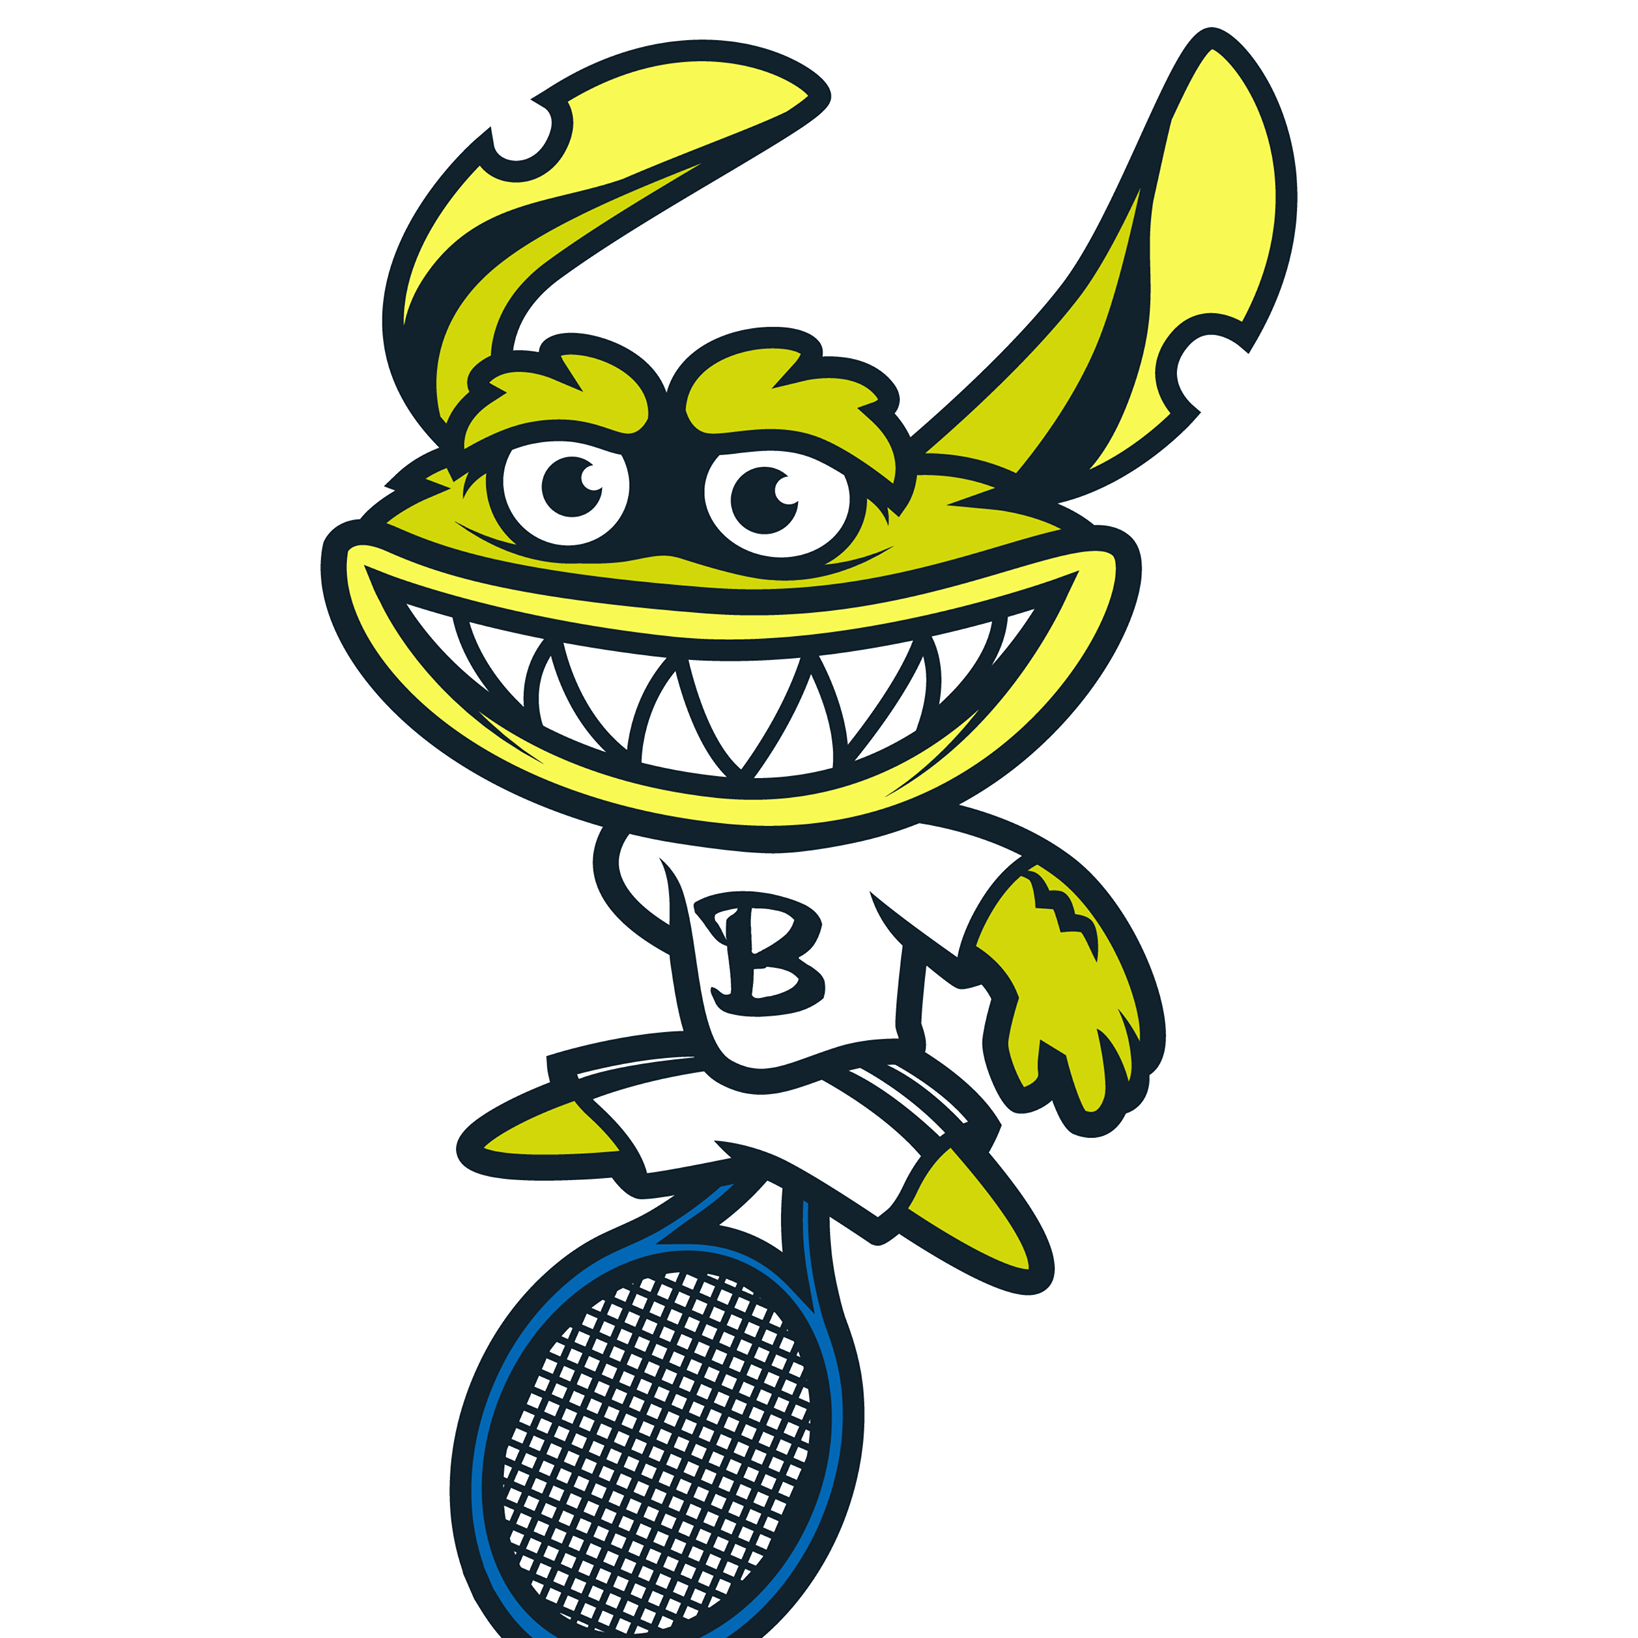 Northampton Tennis Coaching's logo